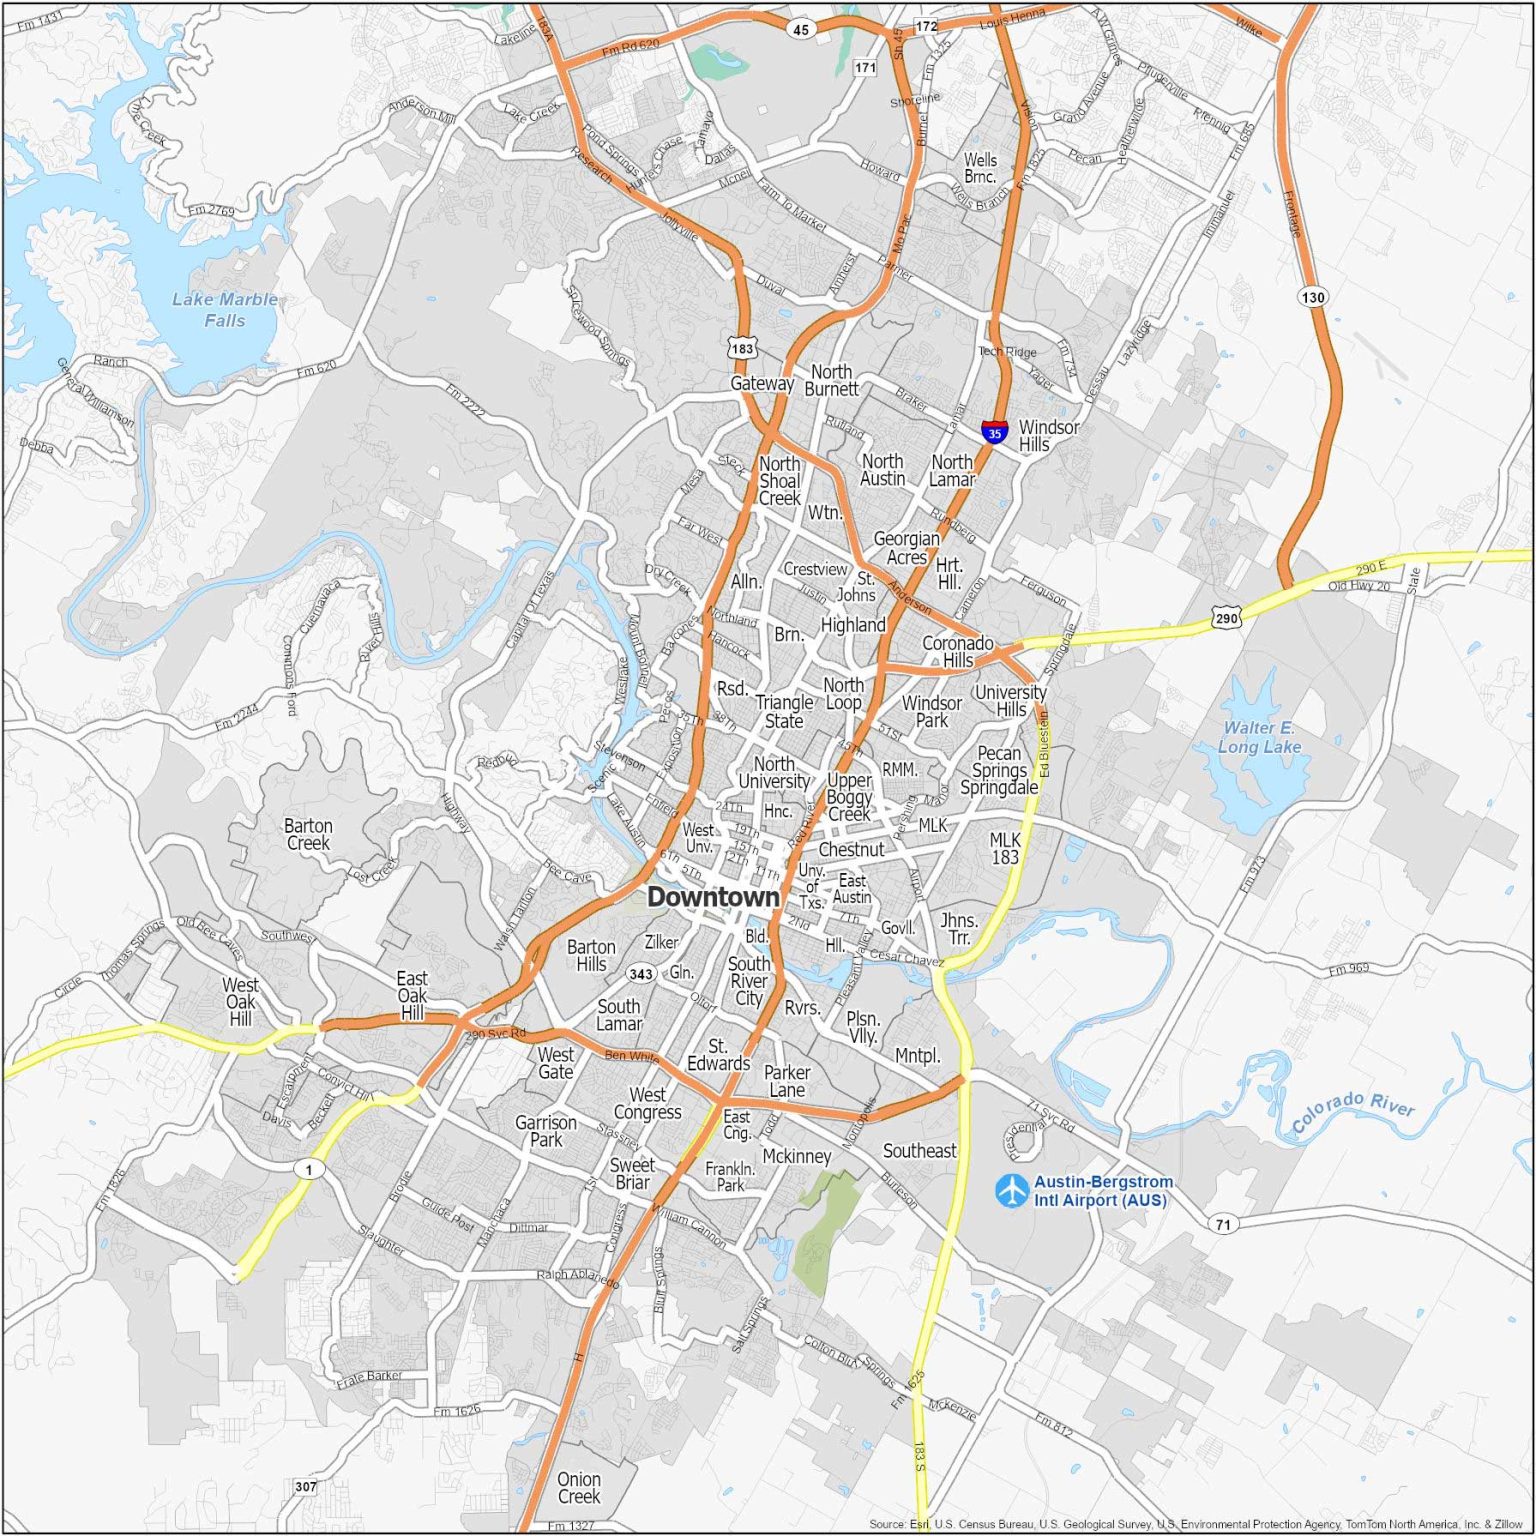 Austin Neighborhood Map